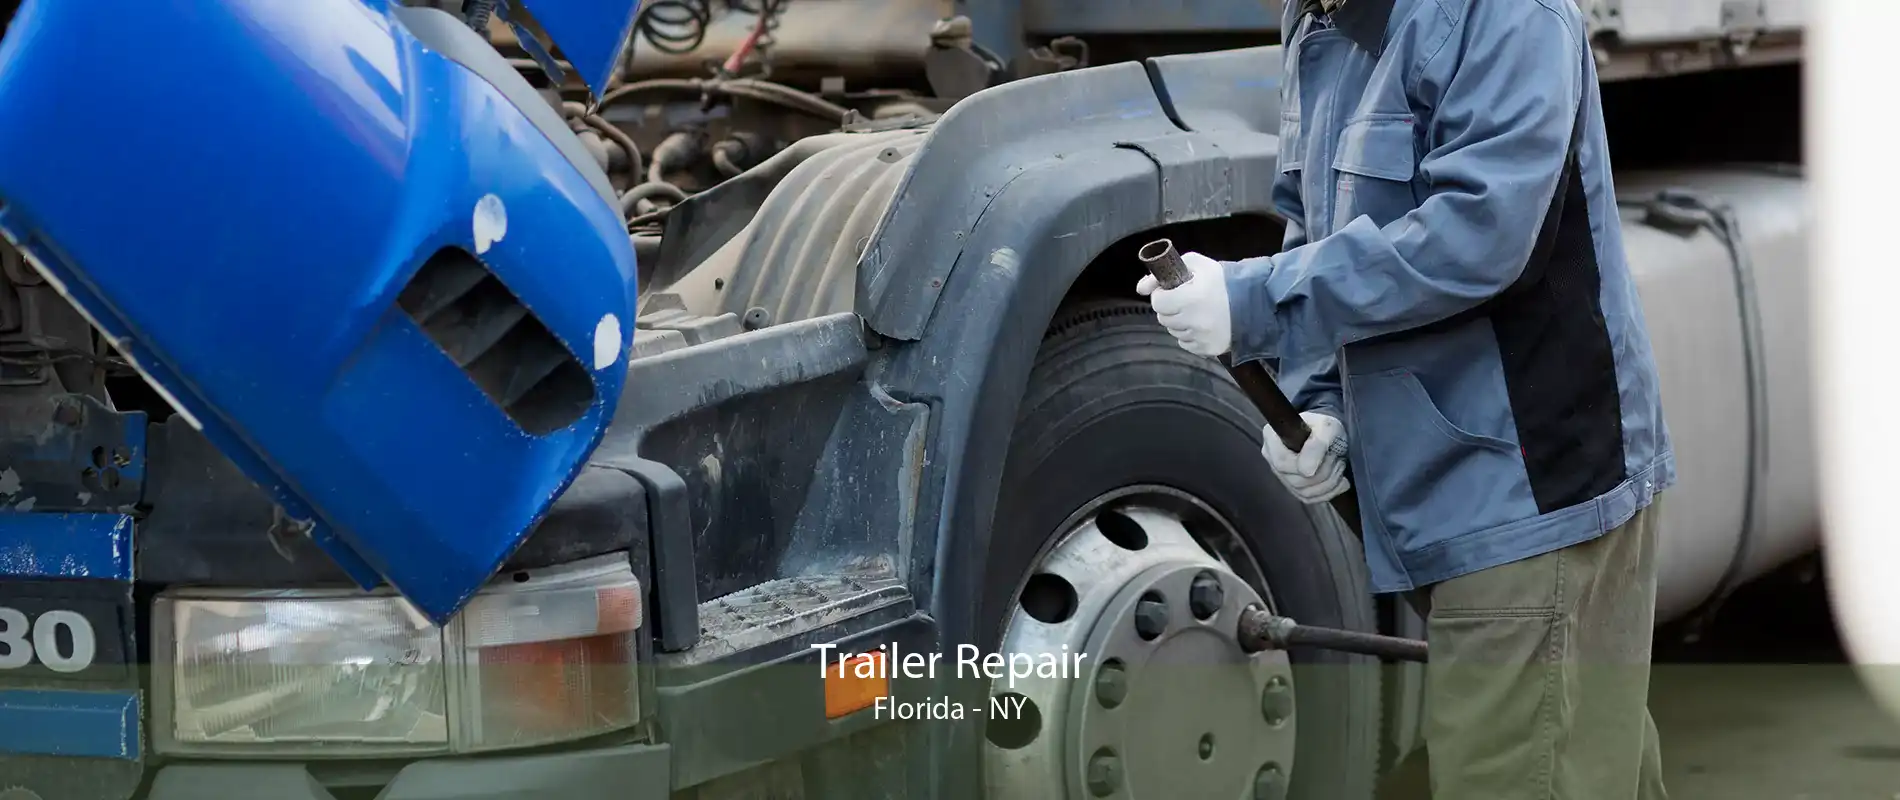 Trailer Repair Florida - NY